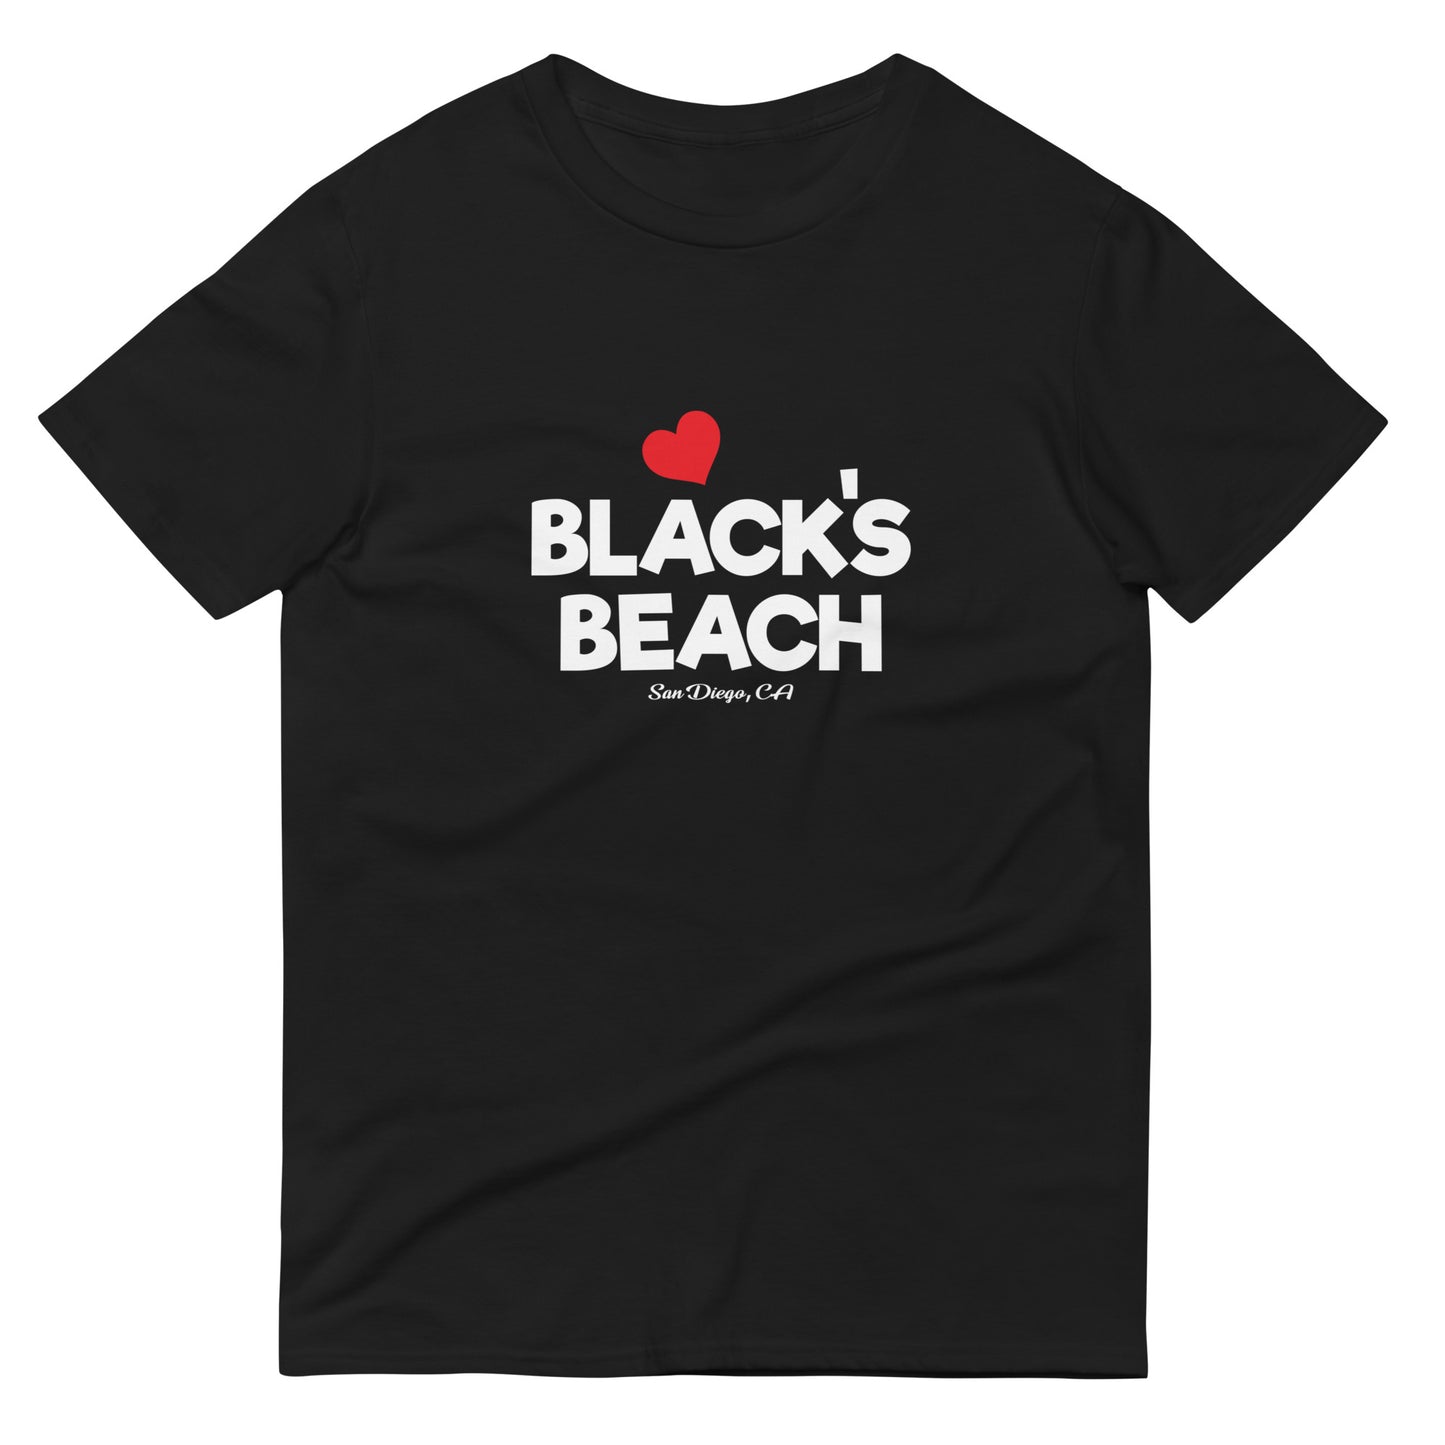 Black's Beach Tees / Style 02 / Short-Sleeve T-Shirt